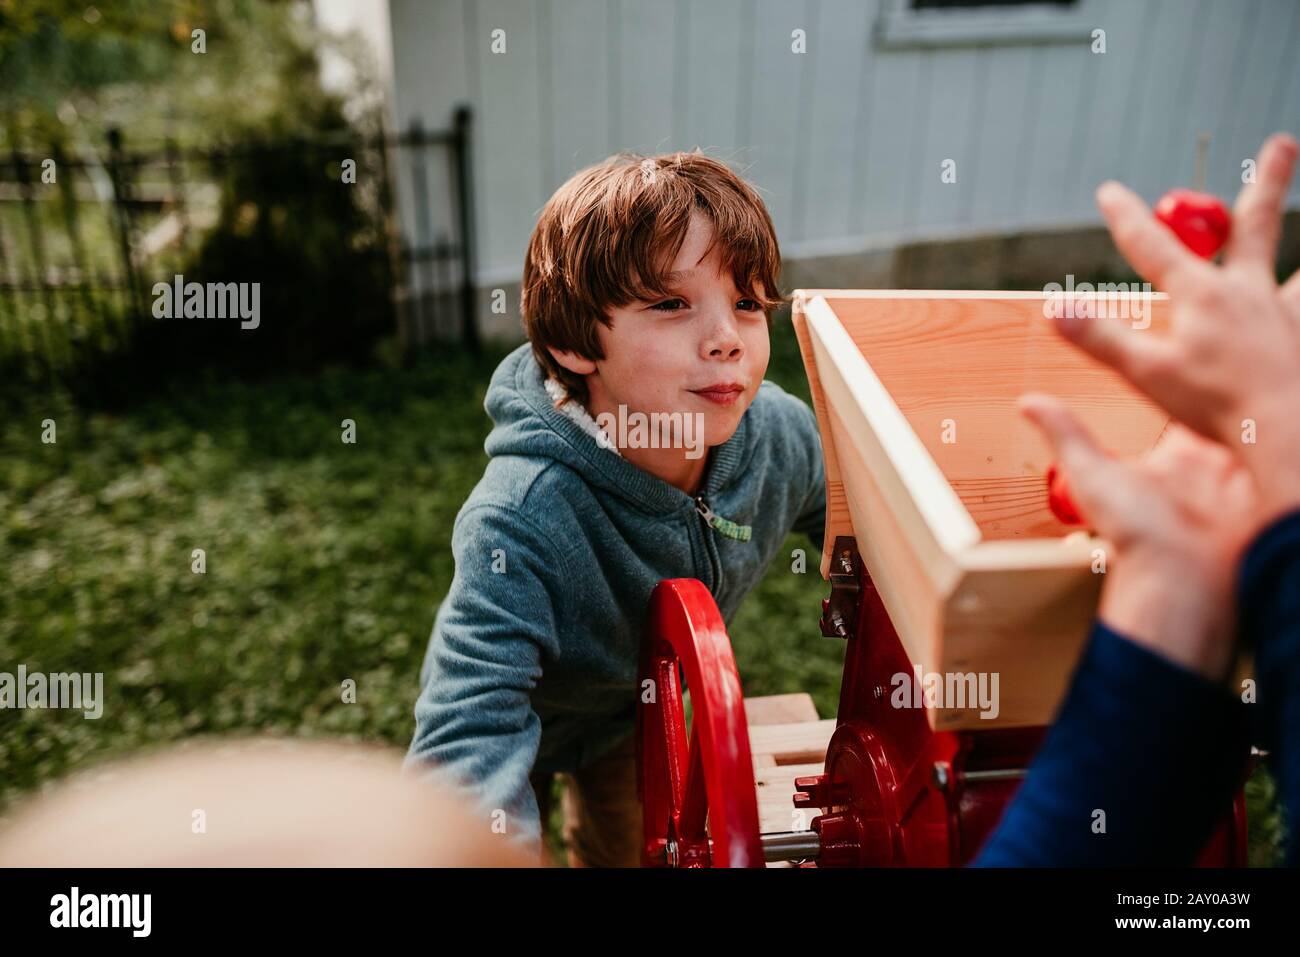 Boy helping press apples to make cider, USA Stock Photo